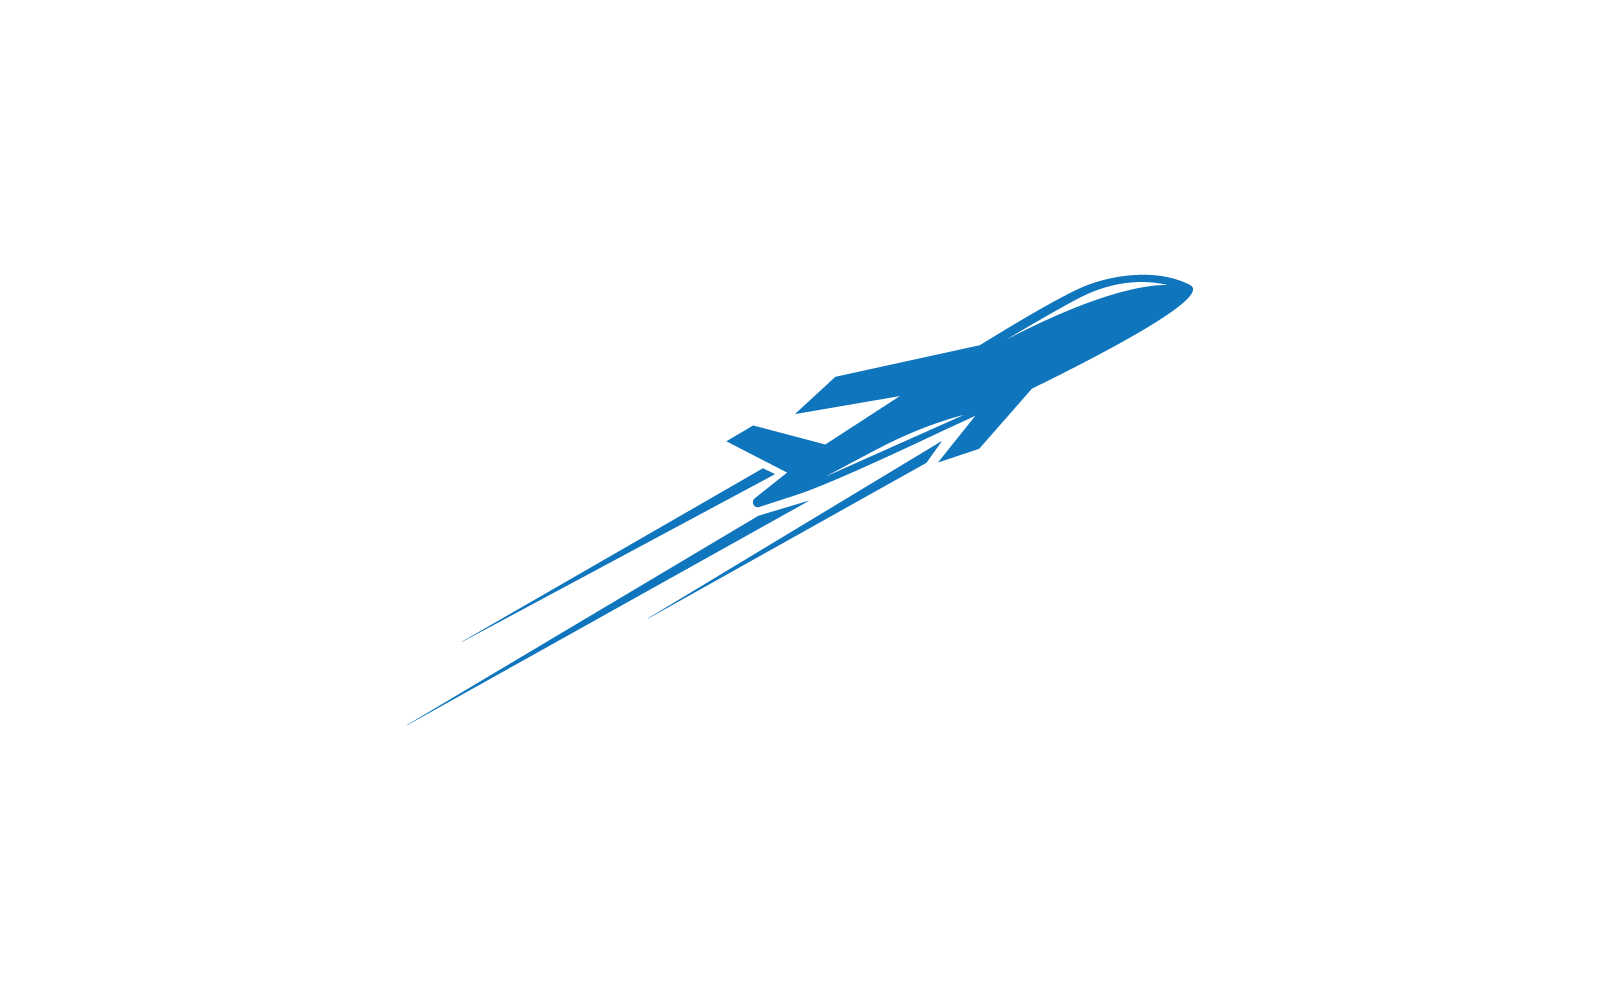 Hava Uçağı illüstrasyon logo vektör düz tasarımı